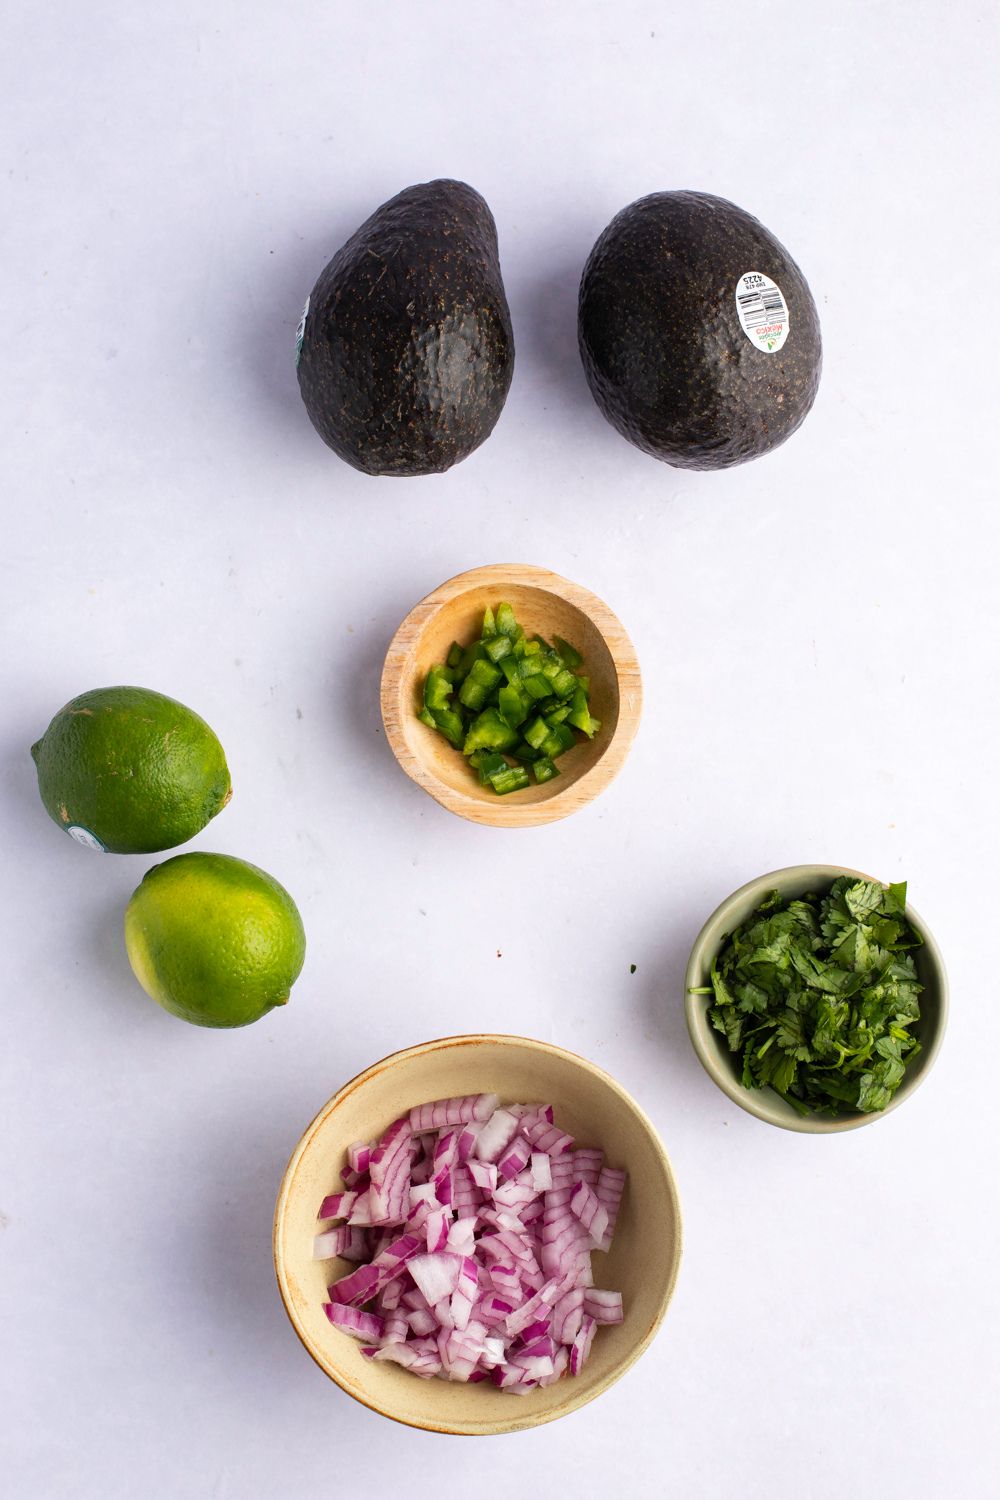 Chipotle Guacamole Ingredients- Avocados, Lime Juice, Cilantro, Onions, Jalapeno and Salt